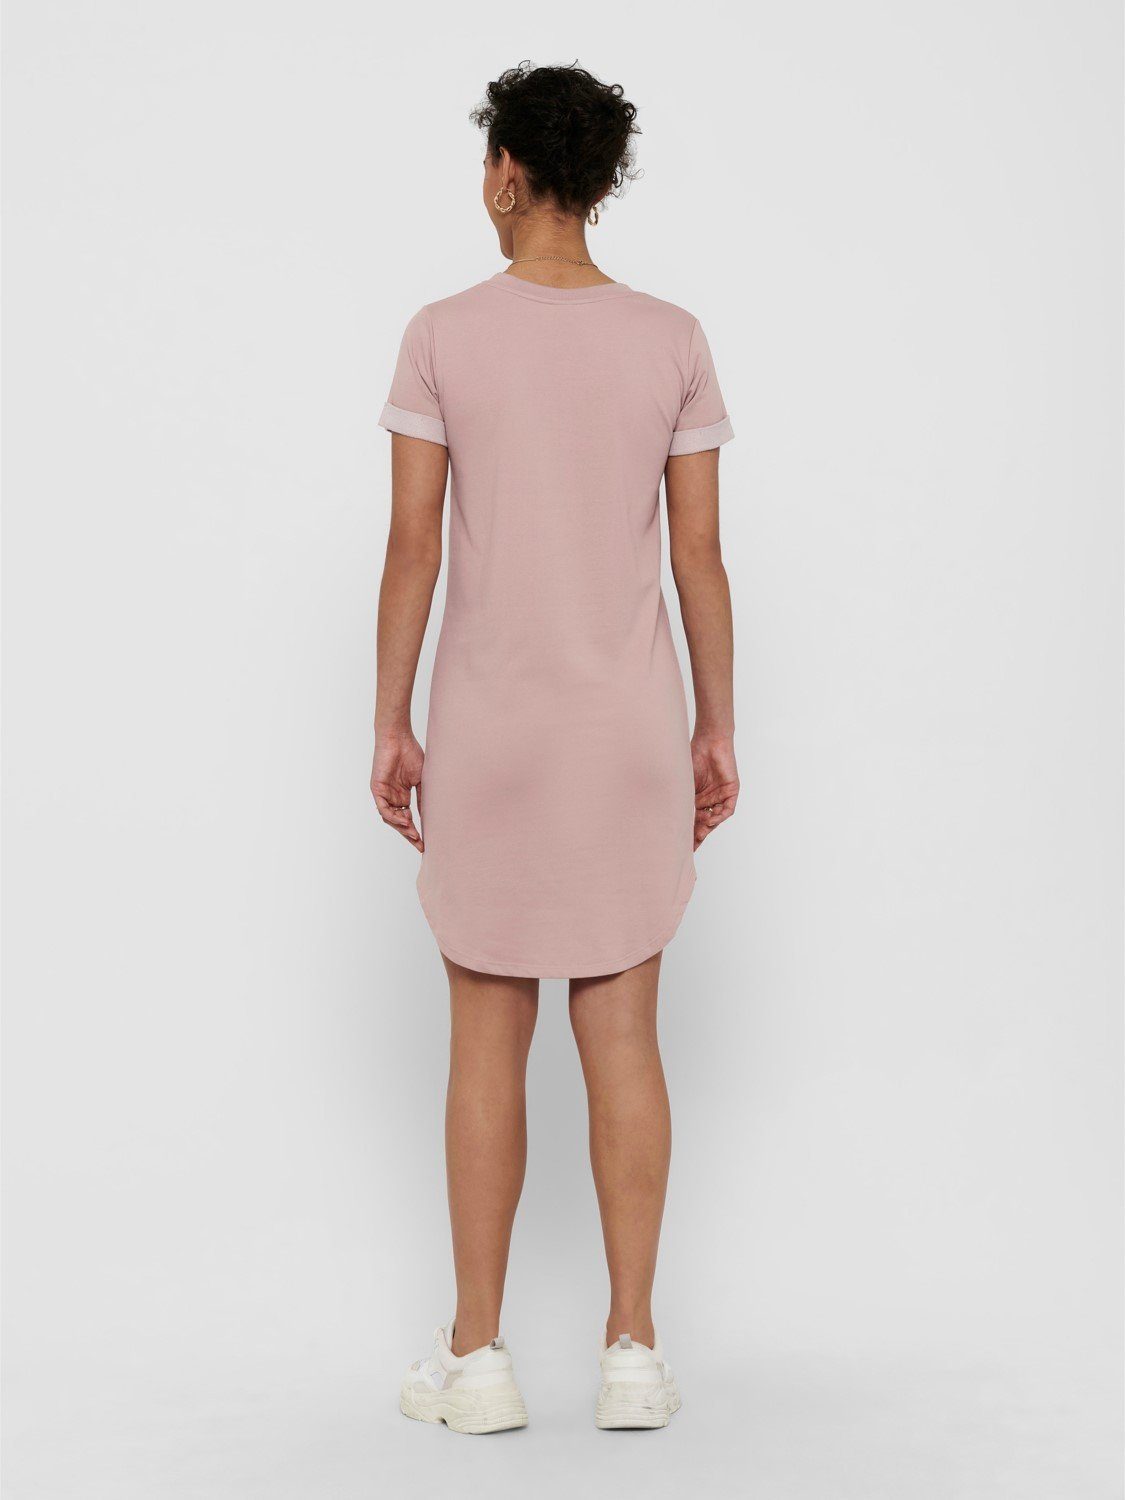 JACQUELINE de Midi Rosa Kleid 3606 Rundhals Shirtkleid (lang, 1-tlg) Tunika Lockeres Dress JDYIVY YONG Shirtkleid in